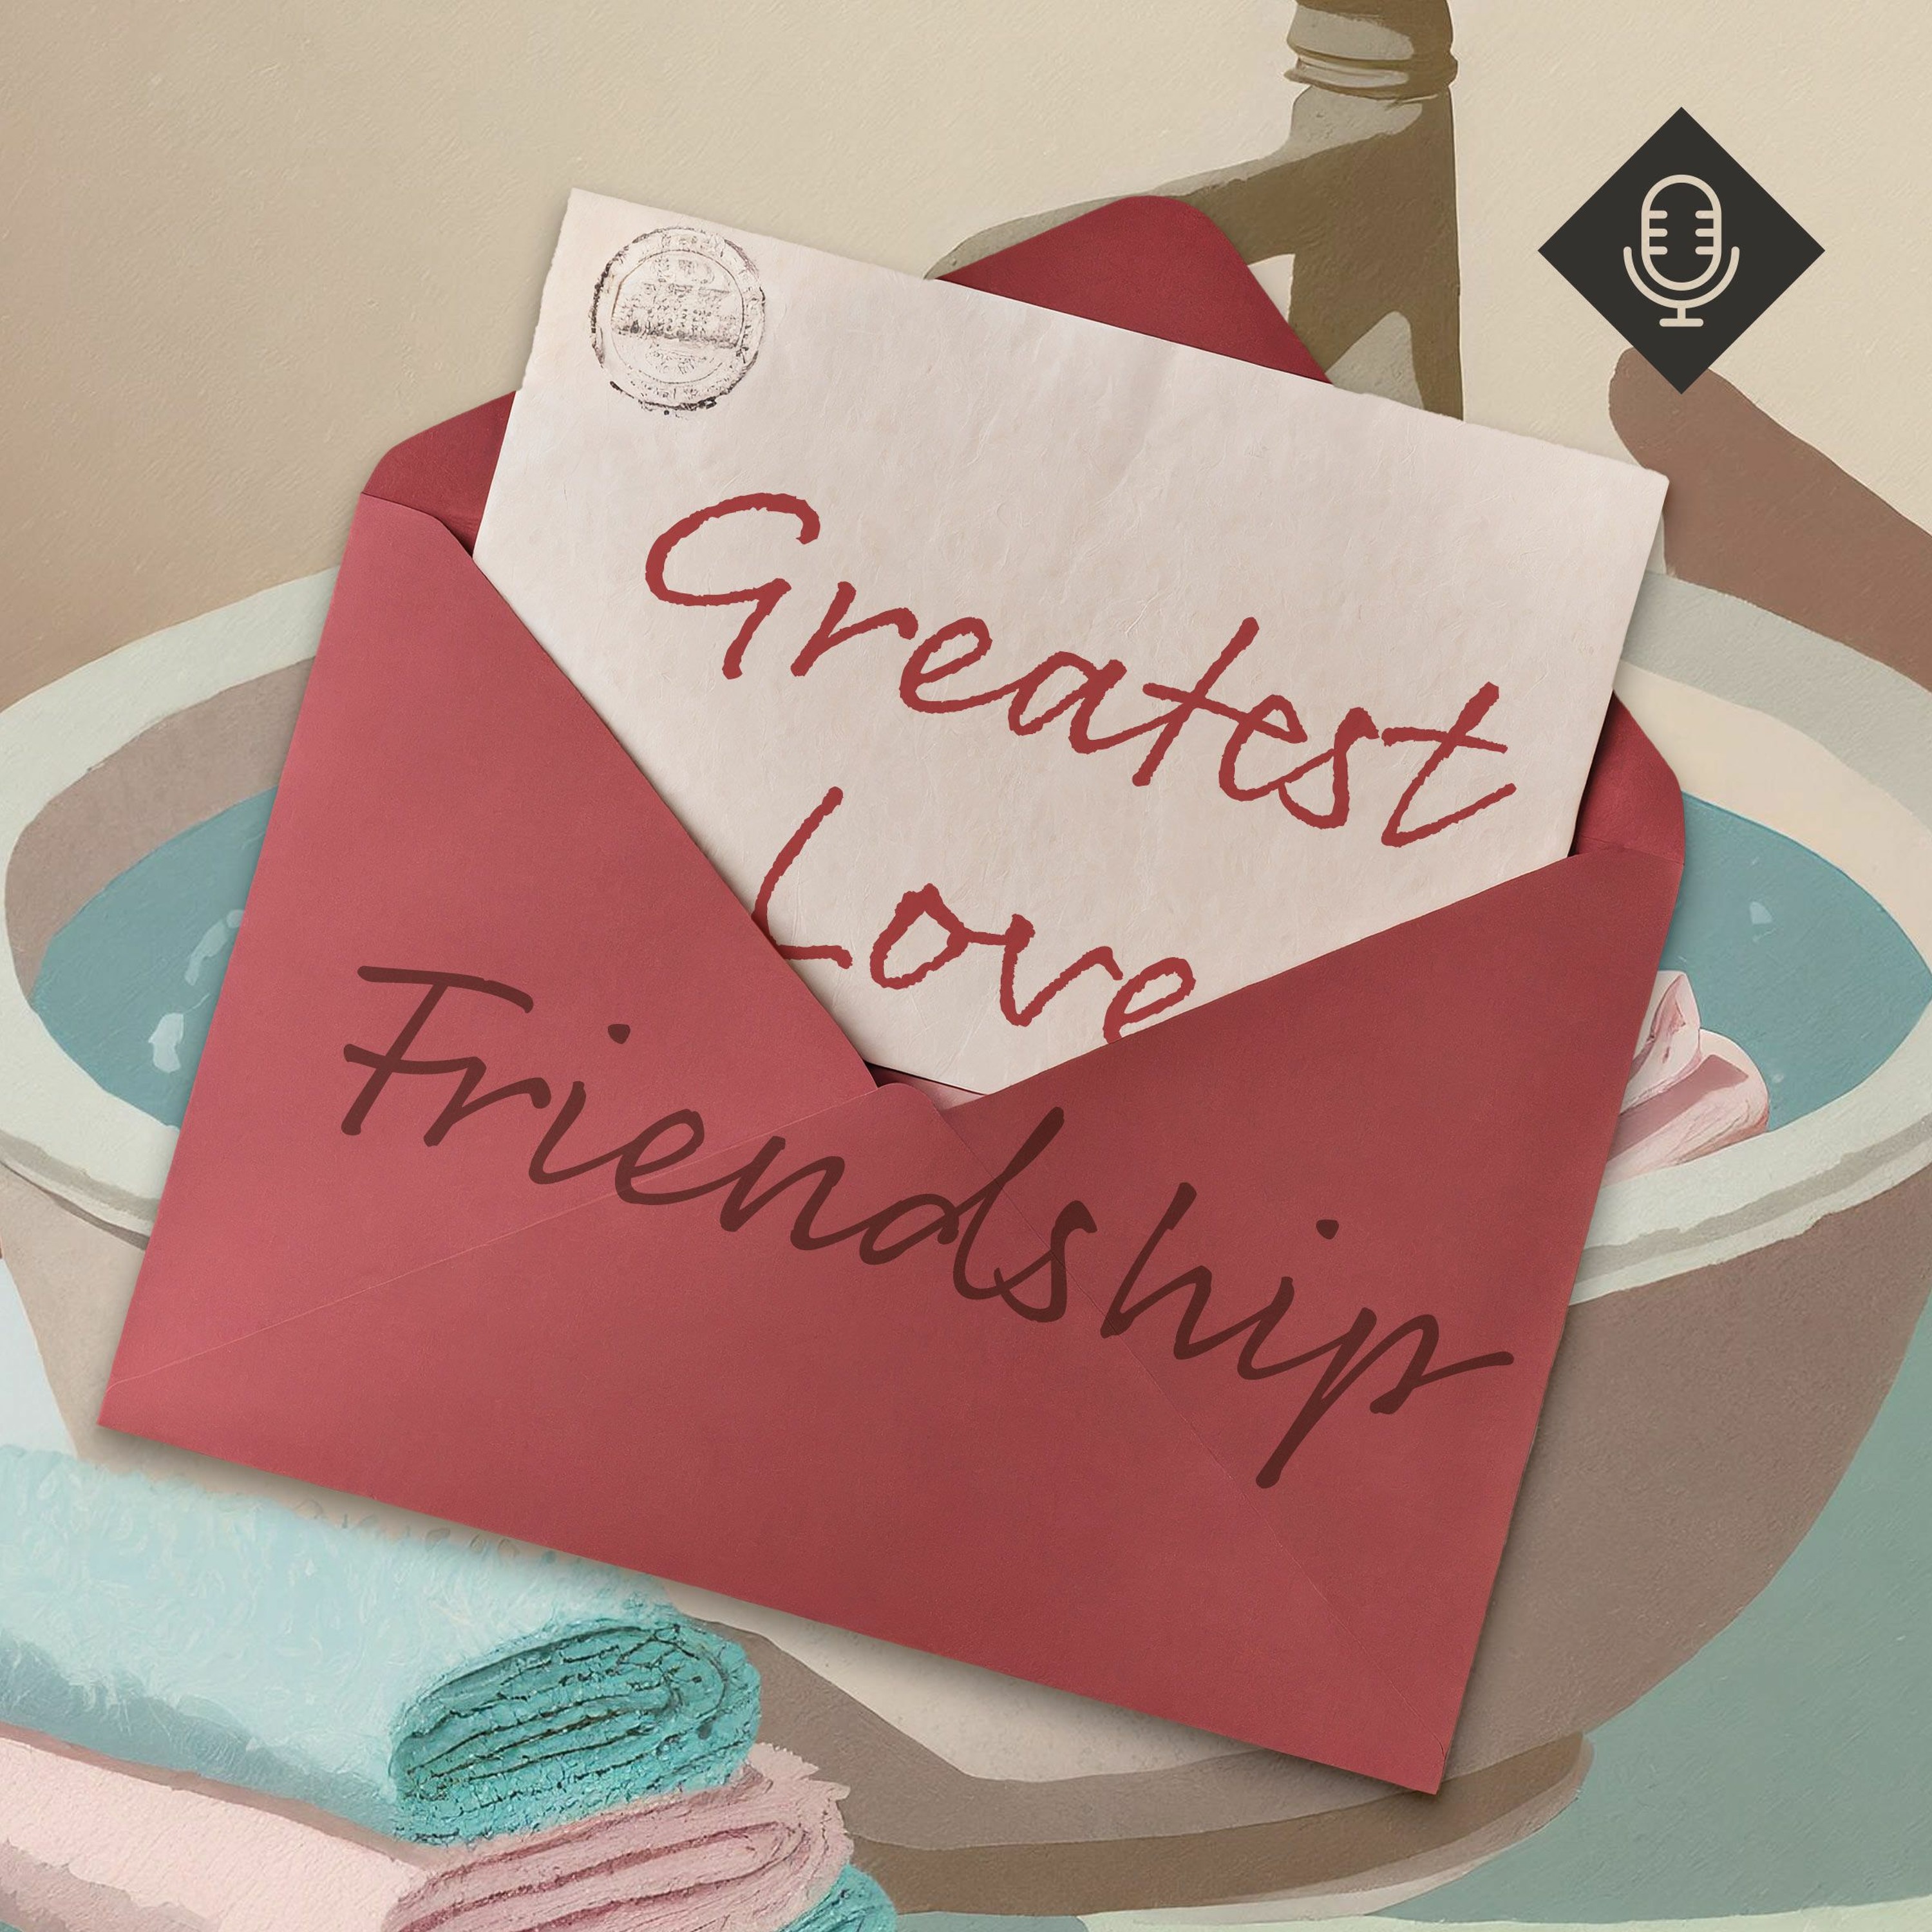 ’Friendship: The Greatest Love’ / Neil Dawson